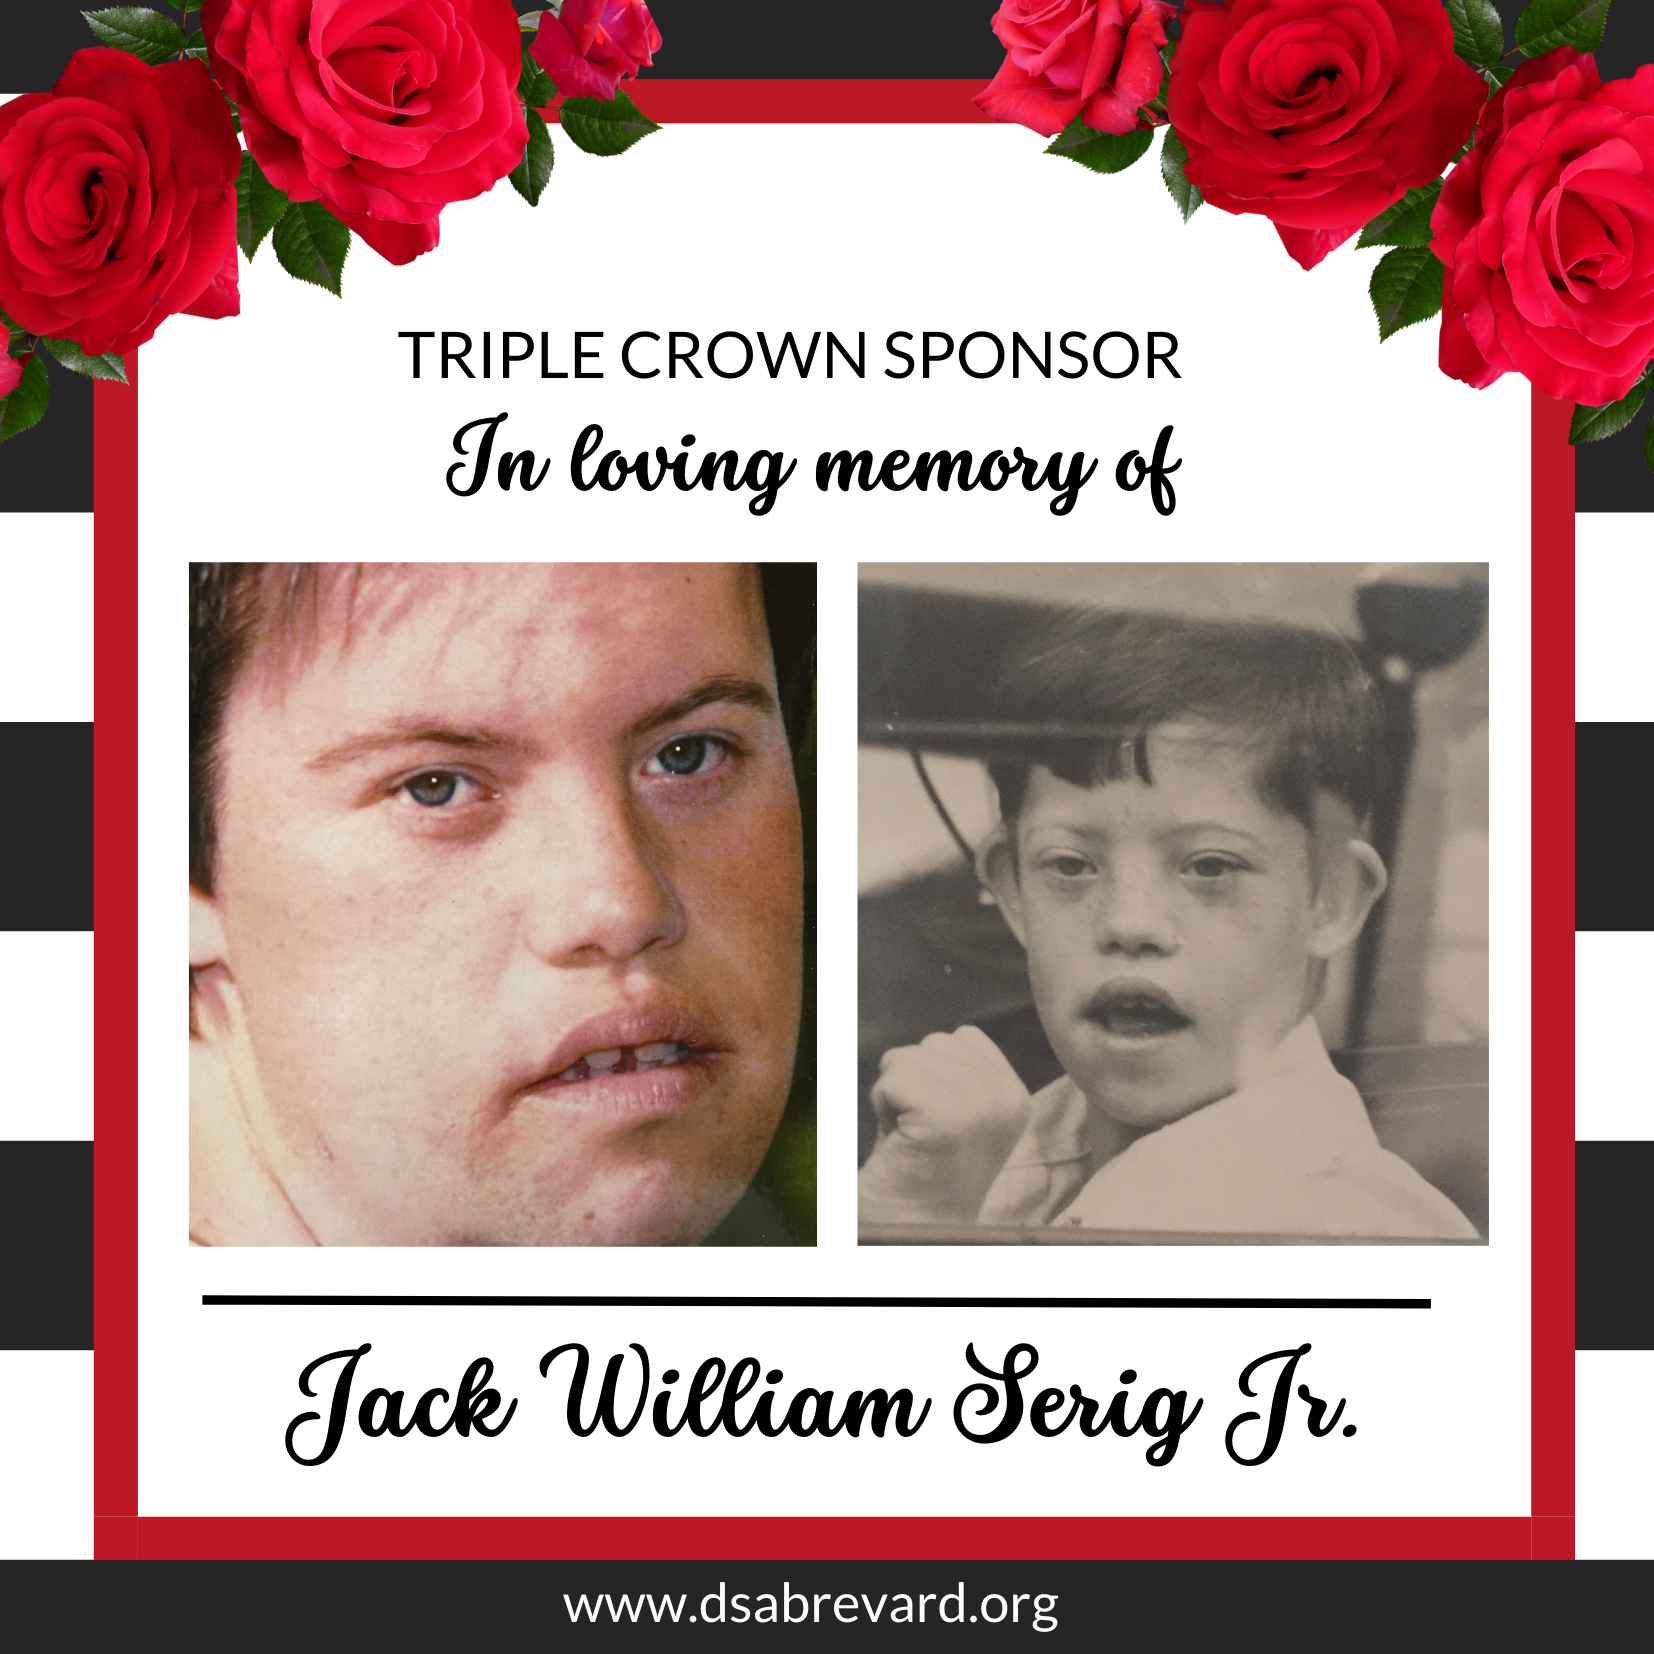 In Loving Memory of Jack William Serig Jr.